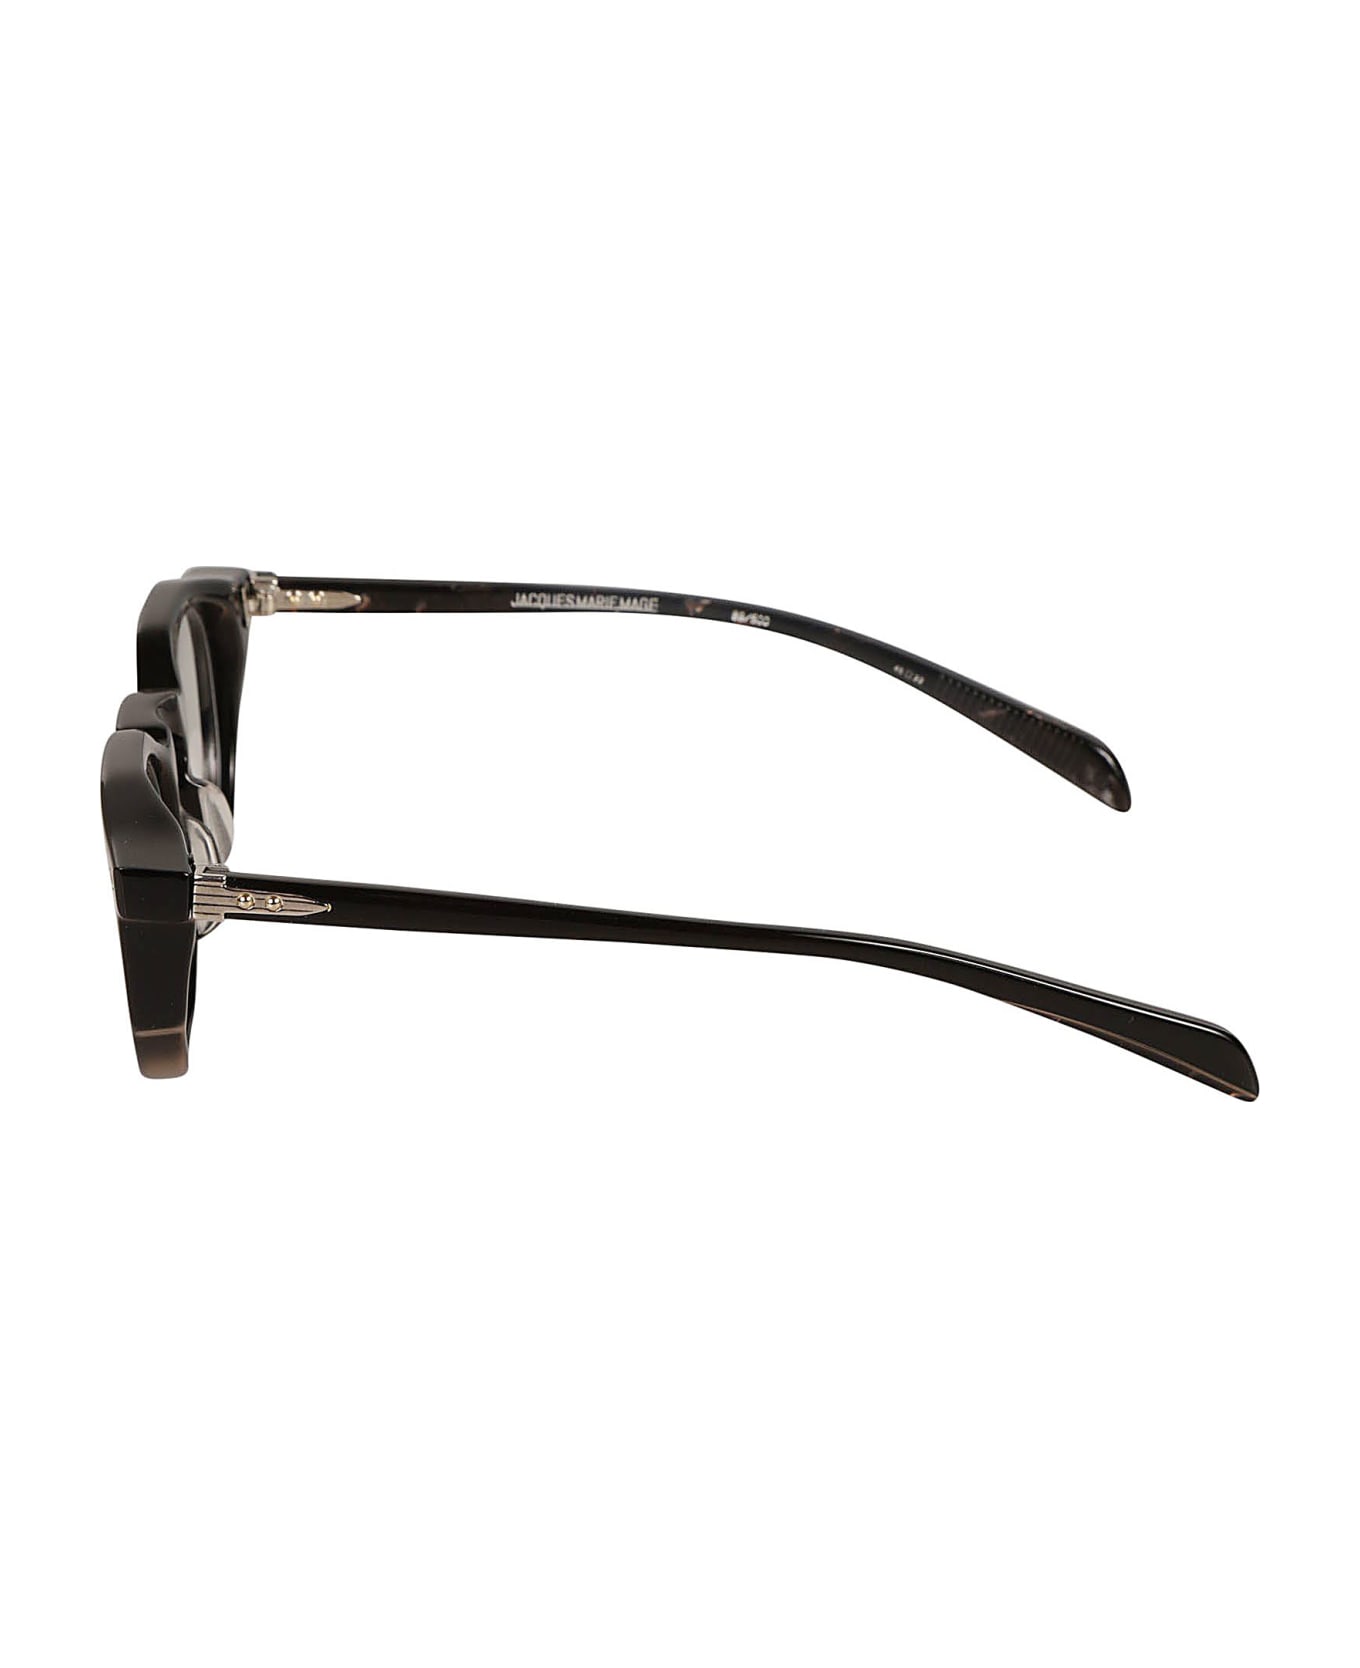 Jacques Marie Mage Sheridan Frame Glasses - black